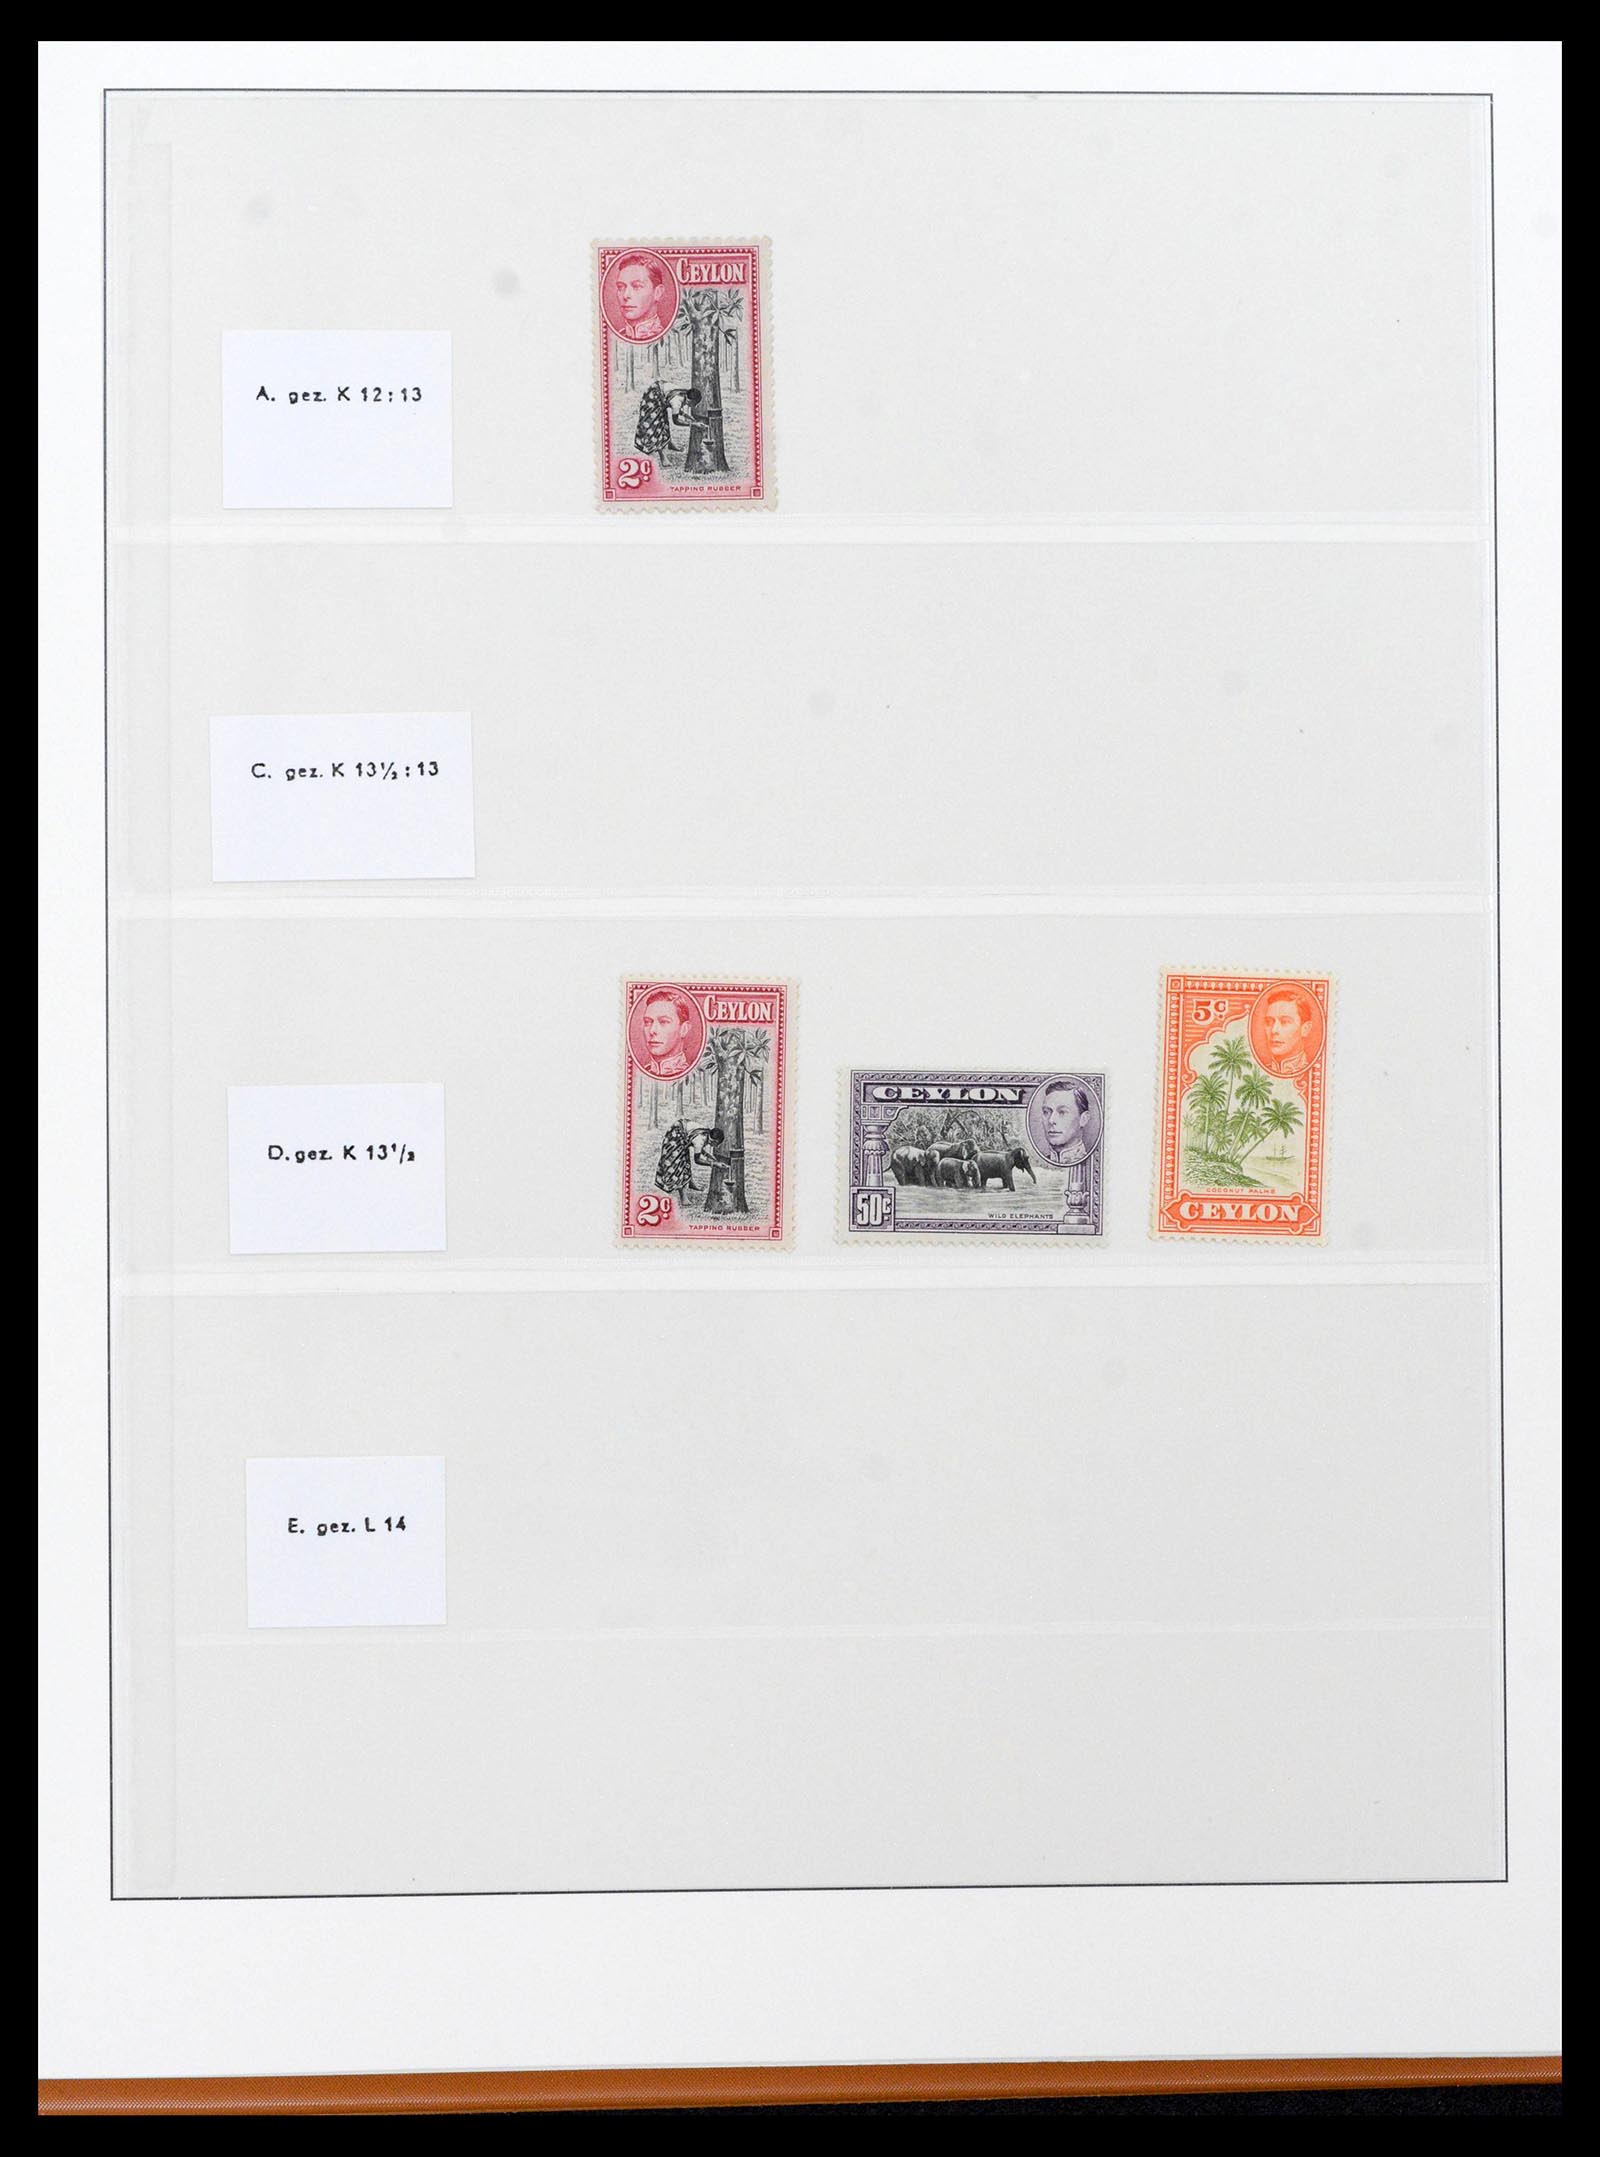 39003 0017 - Stamp collection 39003 Ceylon/Sri Lanka 1857-2003.